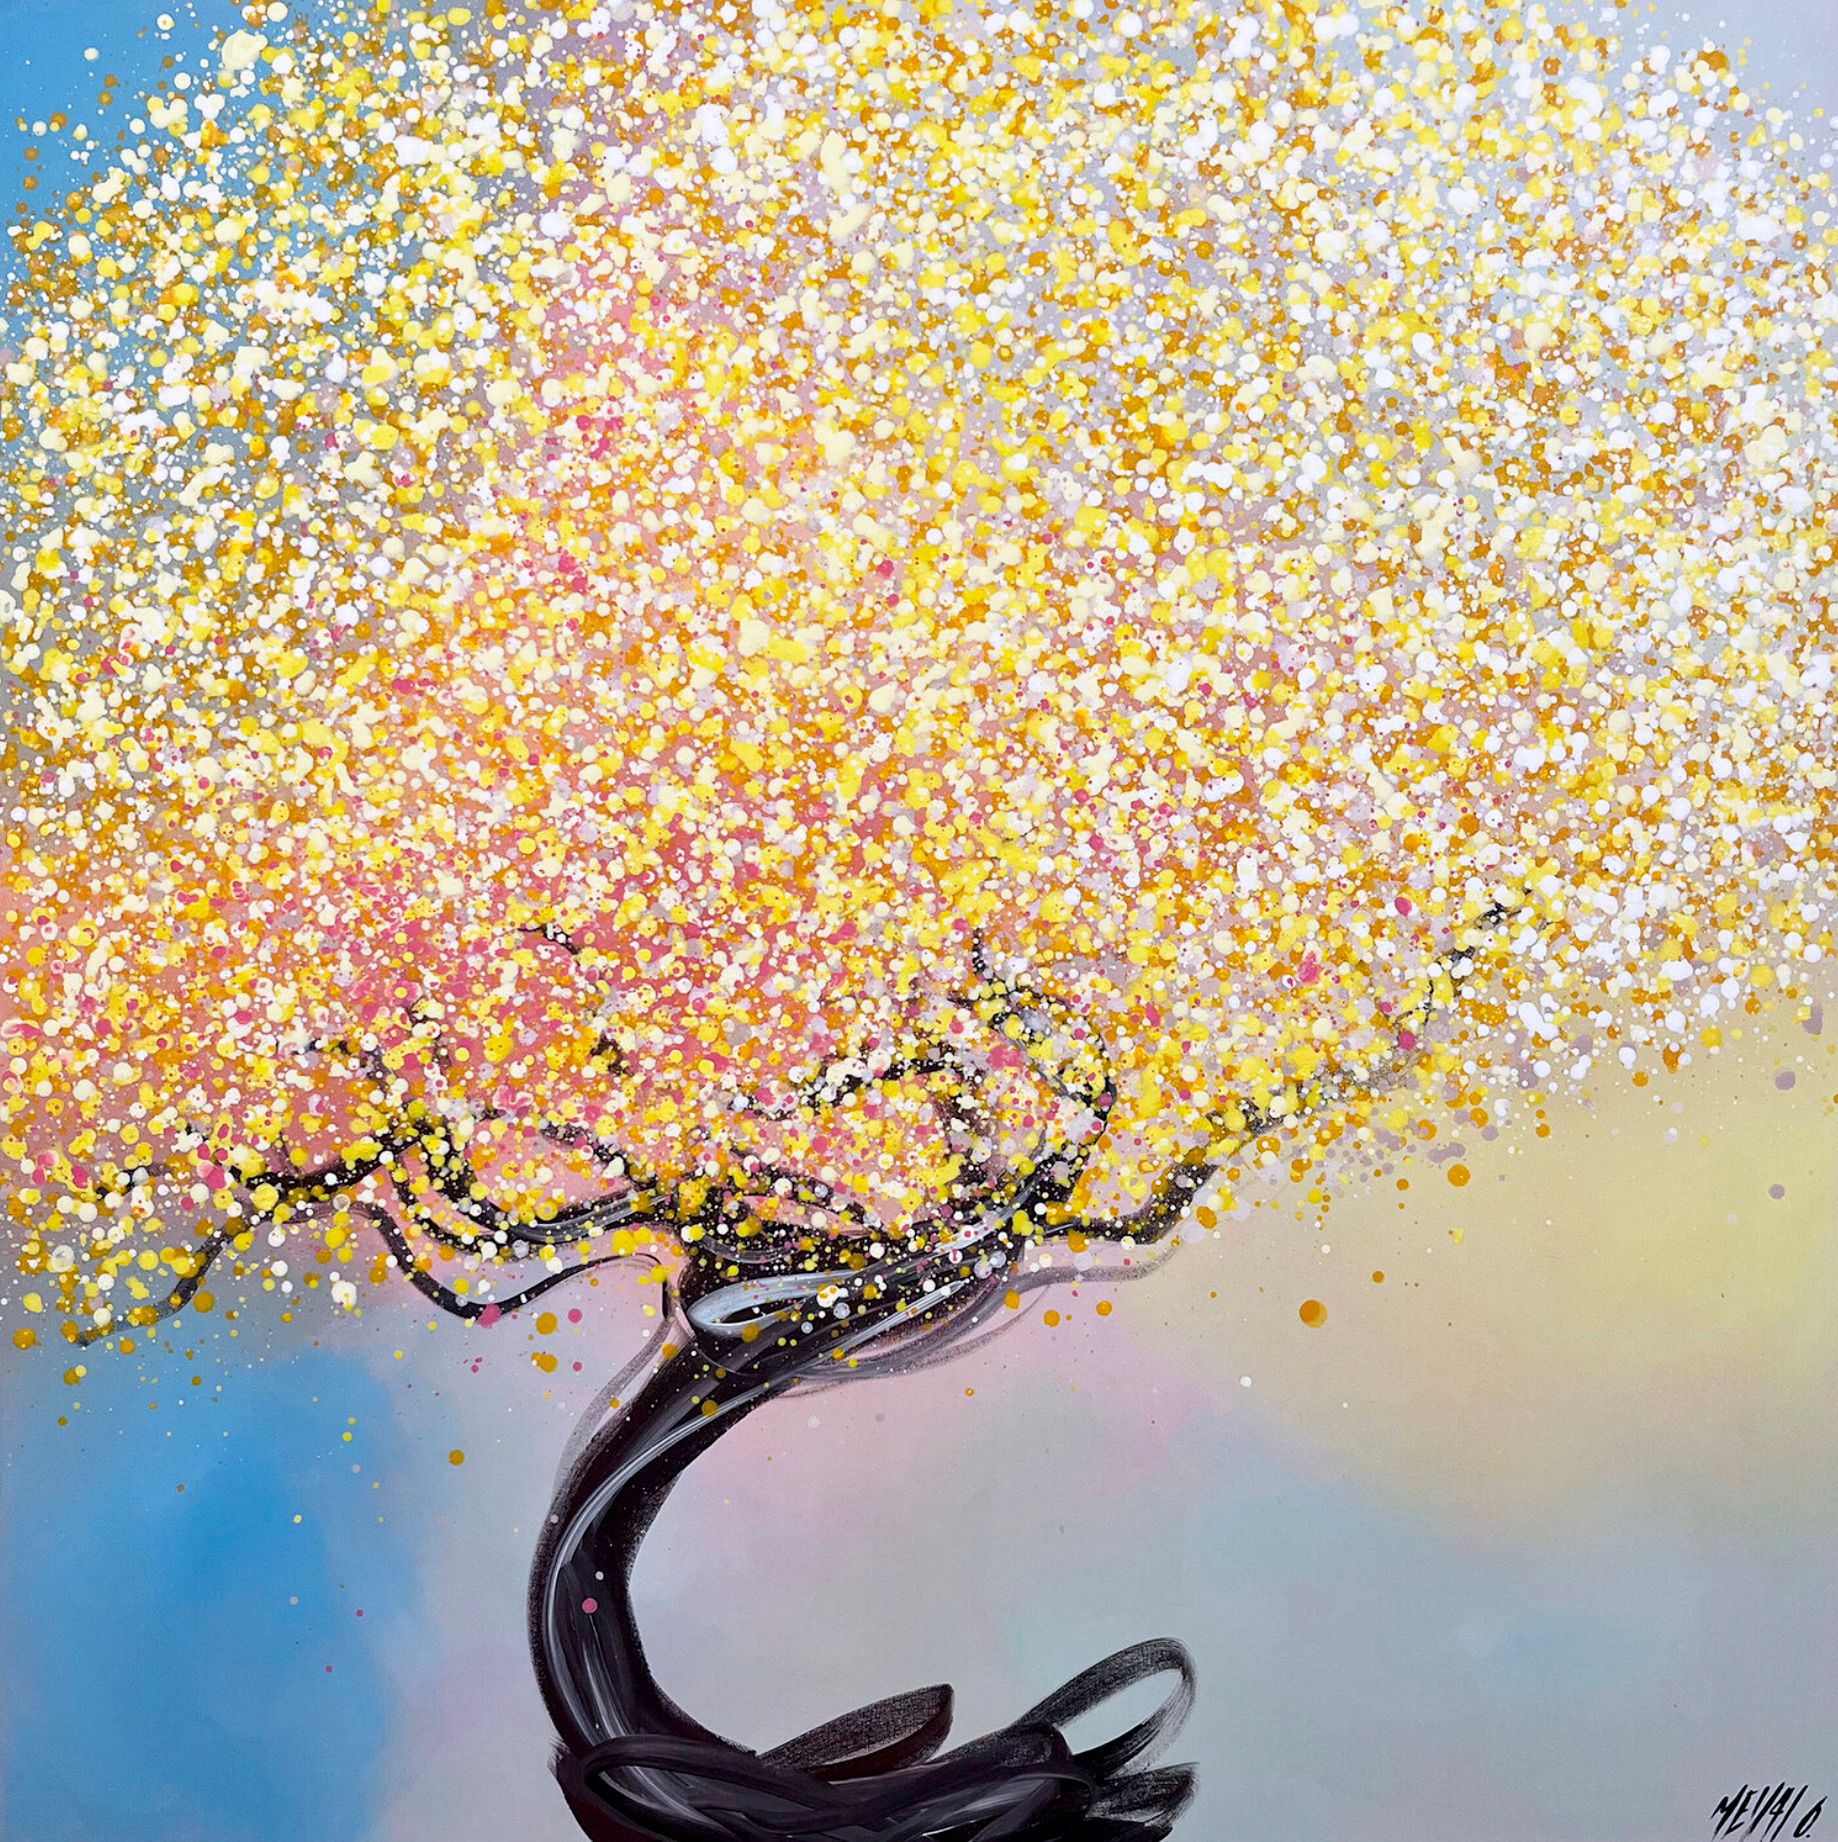 Lumière du matin" de Oliver Messa... "Pintura abstracta de la serie "SOUVENIRS DU SUD". El cuadro parece un maravilloso árbol amarillo en flor de primavera.